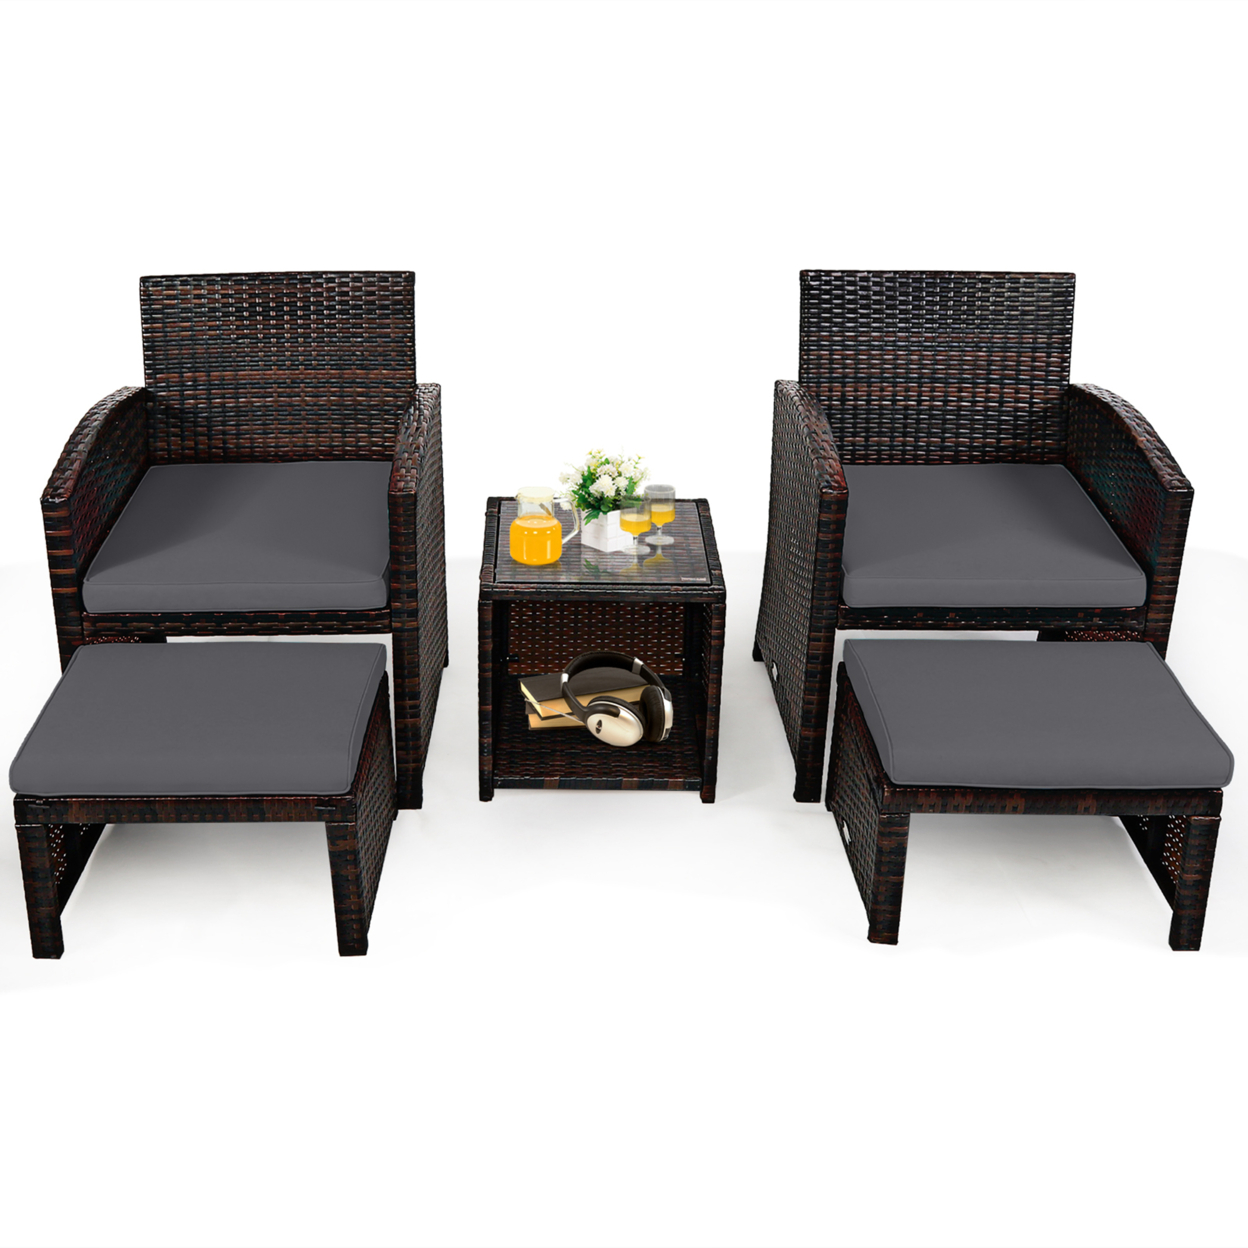 5PCS Rattan Patio Furniture Set Chair & Ottoman Set W/ Grey Cushions